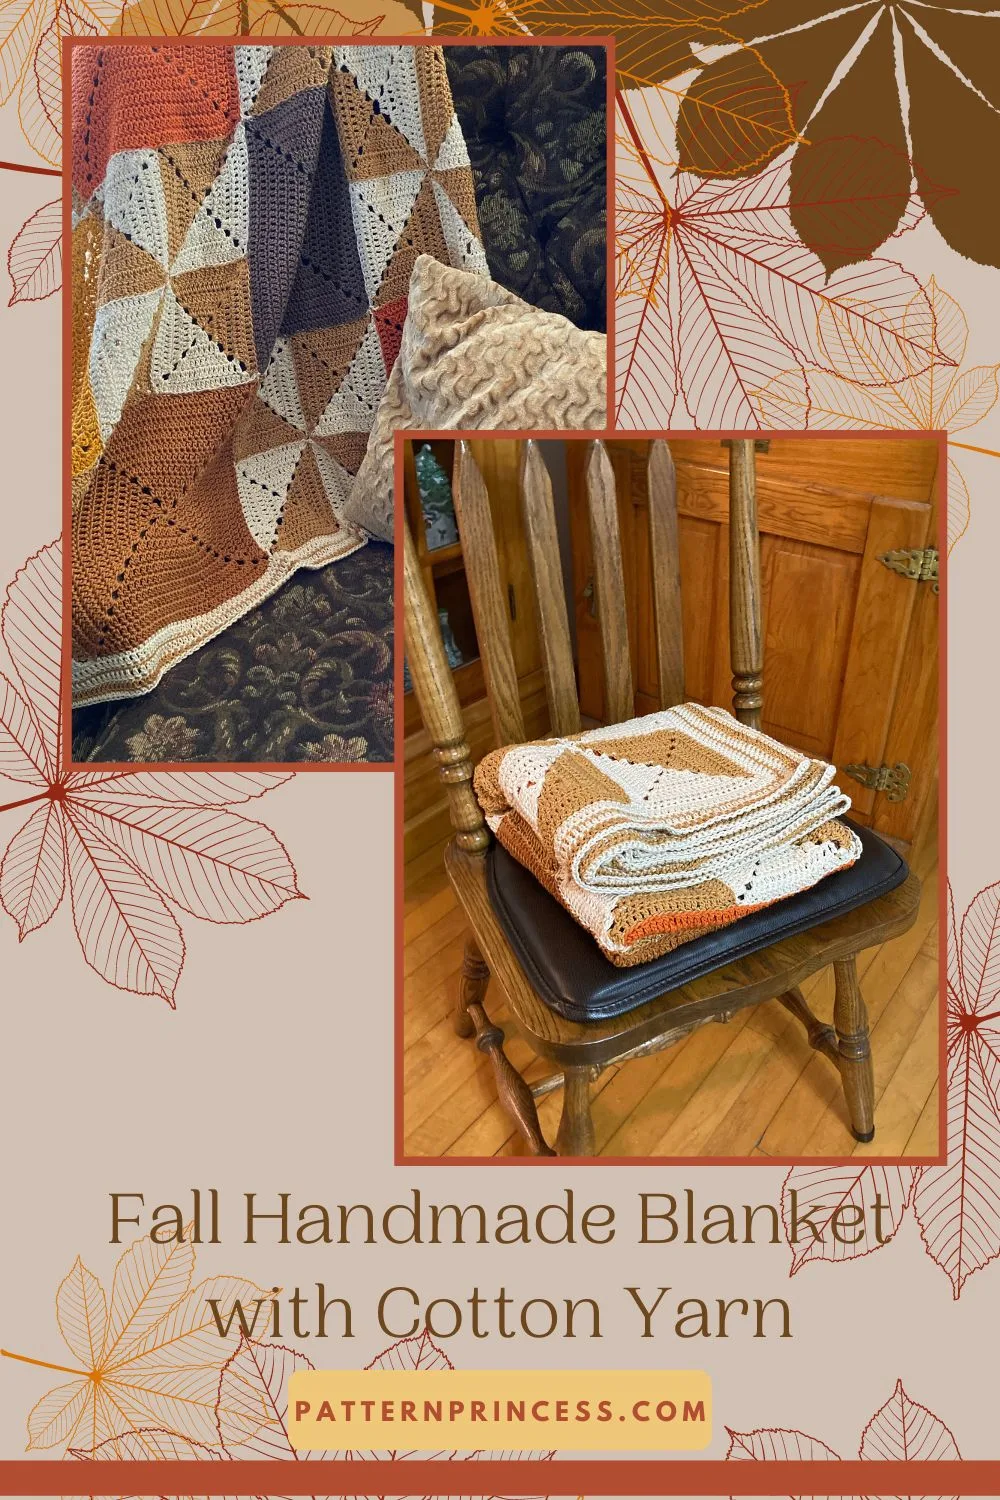 Fall Handmade Blanket with Cotton Yarn